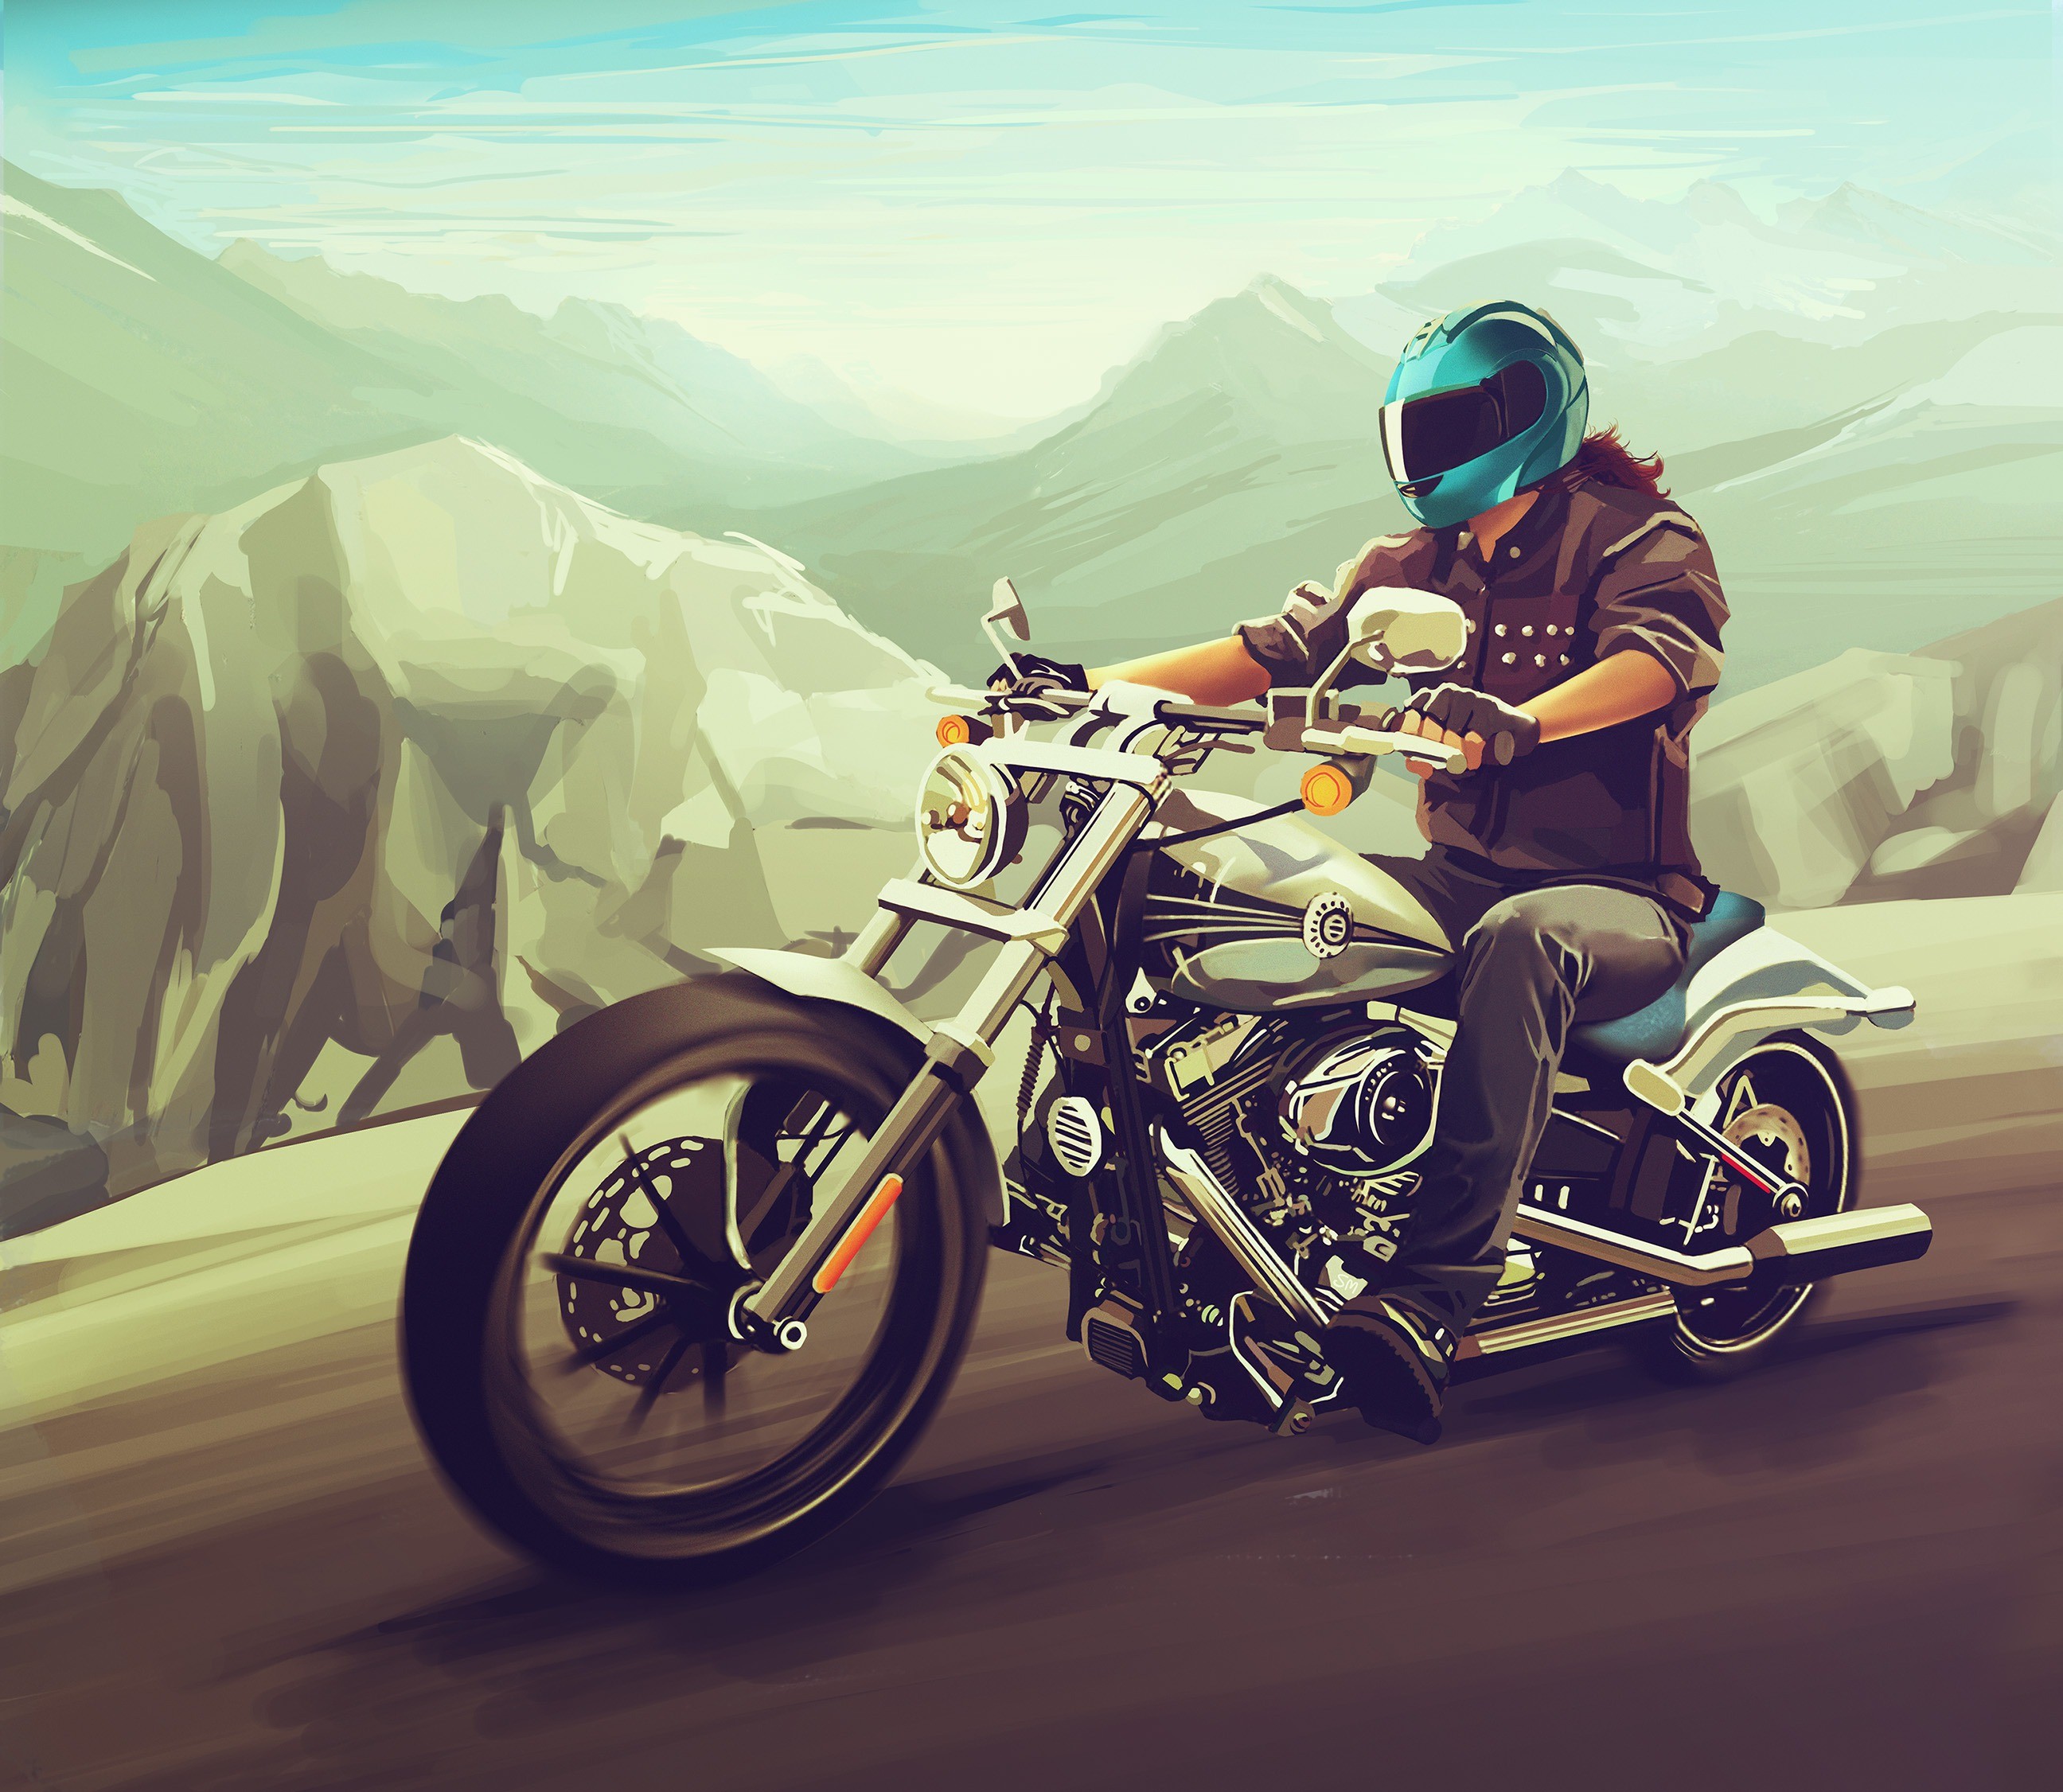 General 2592x2252 artwork motorcycle vehicle Harley-Davidson men landscape road mountains American motorcycles